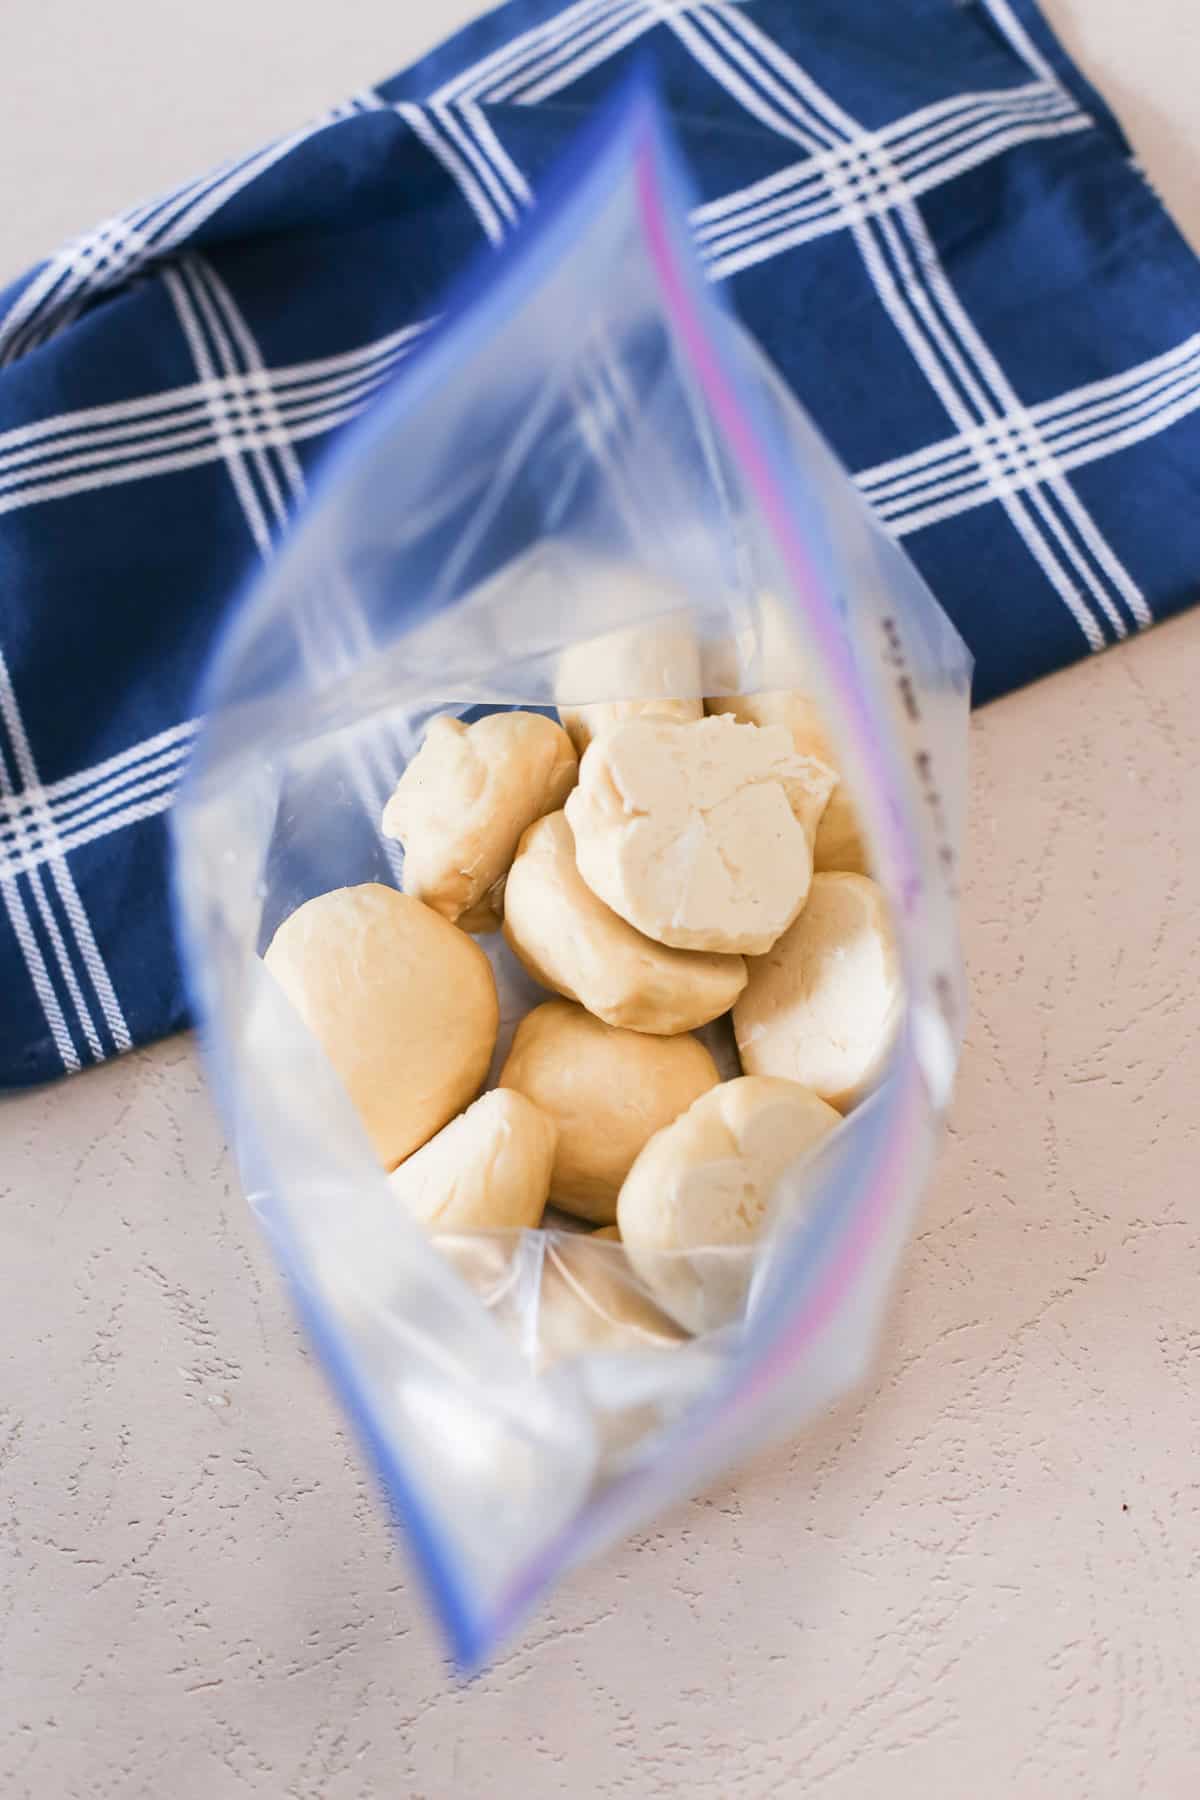 Flash frozen, unbaked dinner rolls inside a freezer bag.